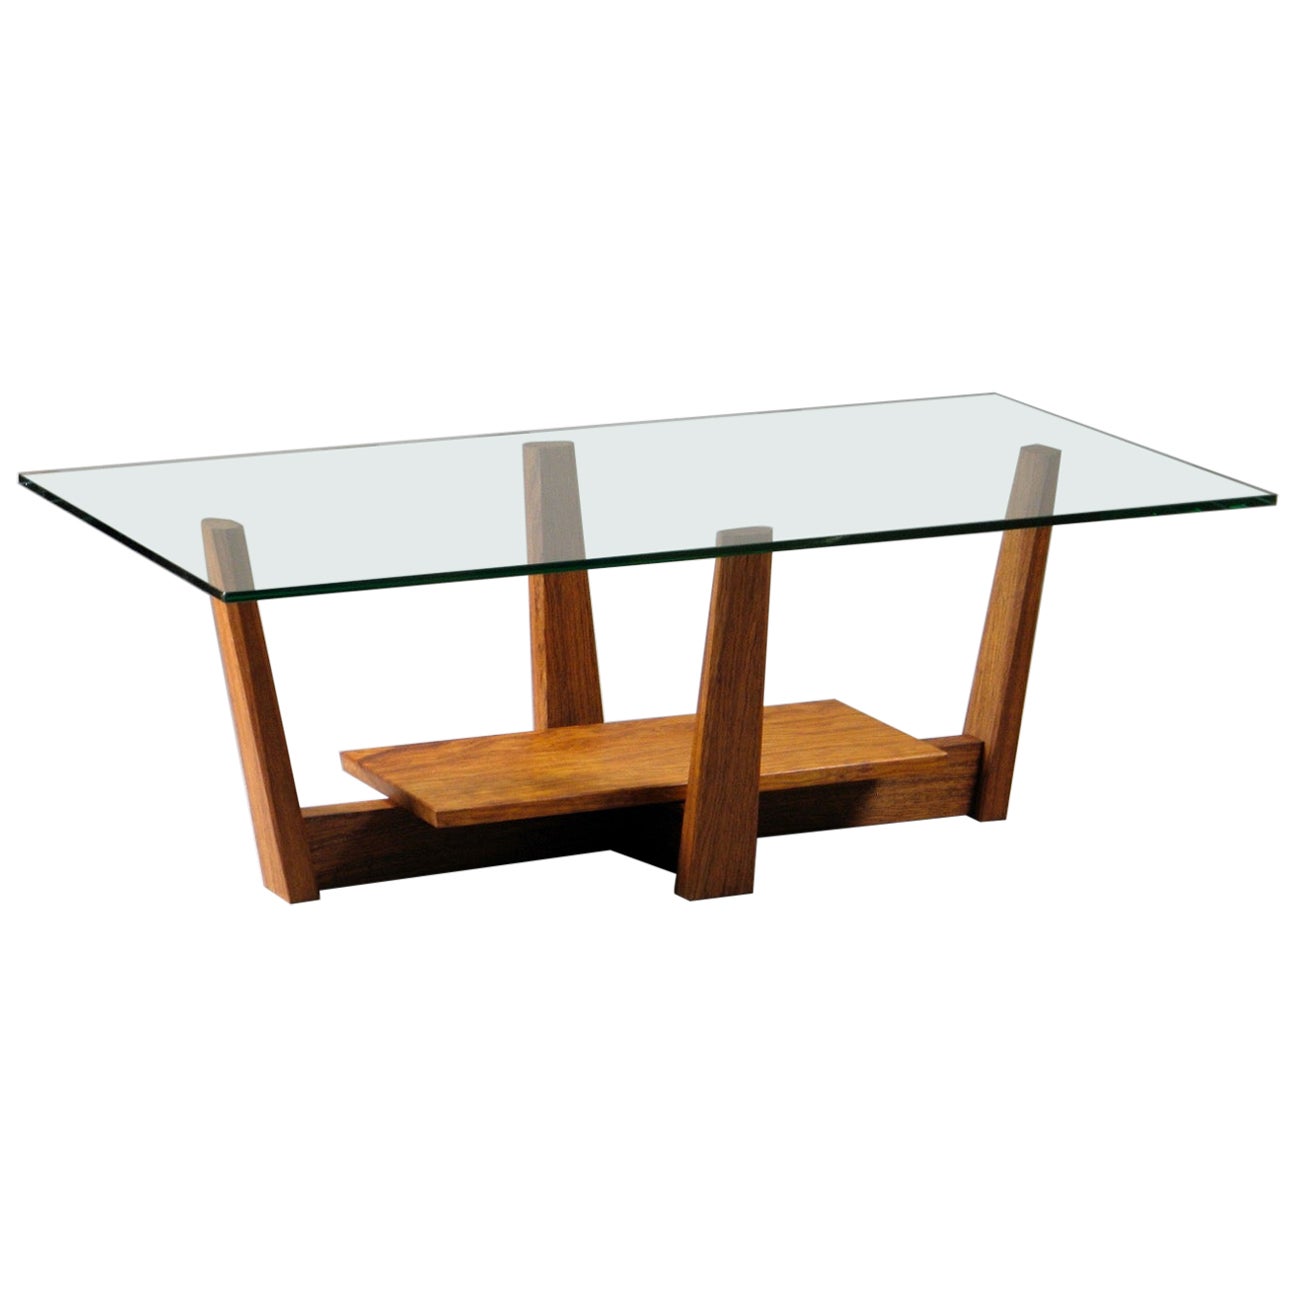 Table basse en verre et bubinga par Thomas Throop/ Black Creek Designs - En stock